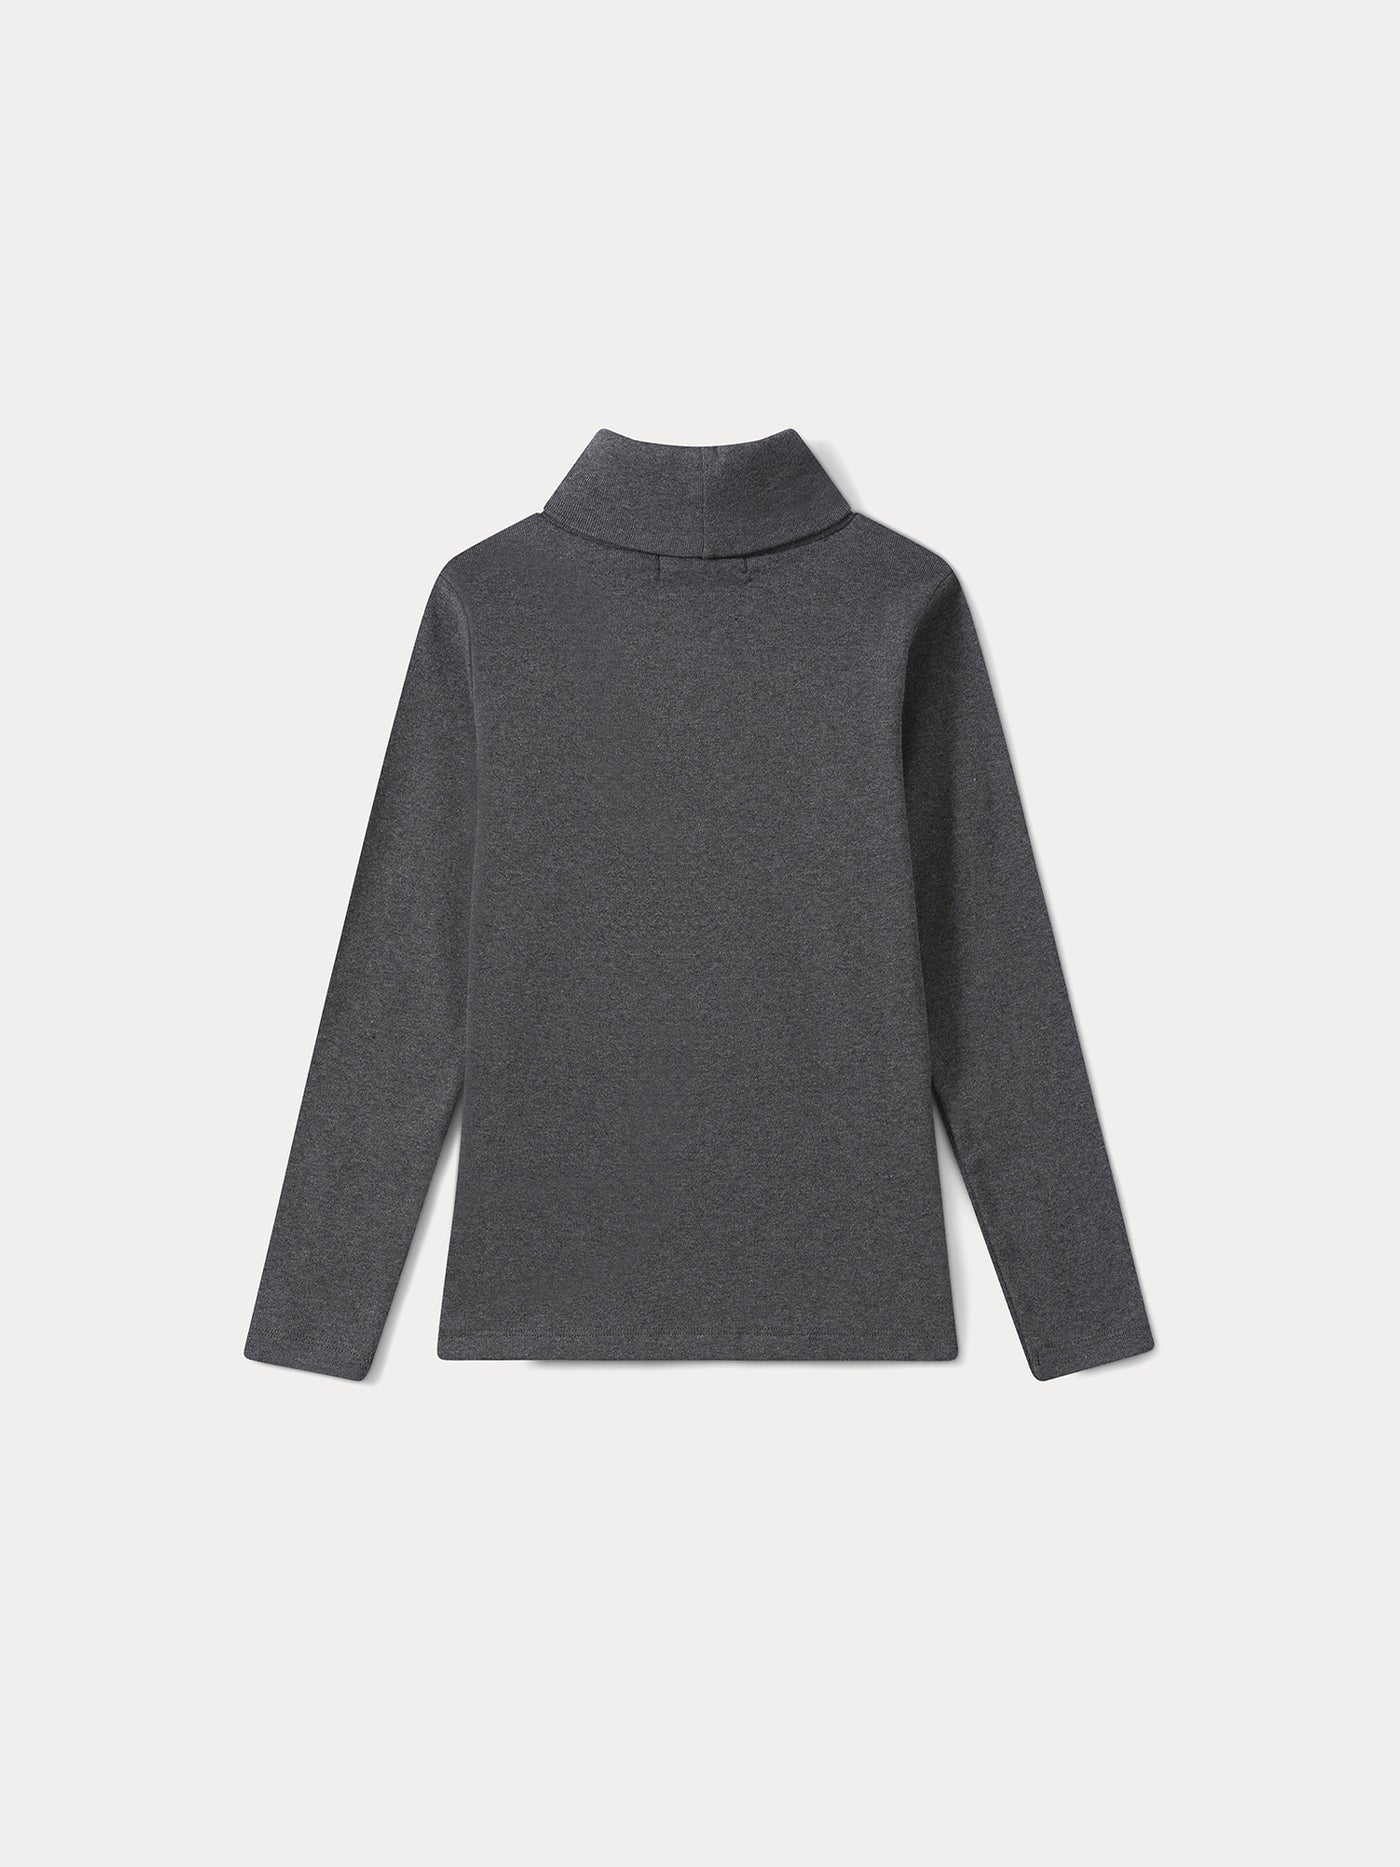 Thin turtleneck sweater dark heathered gray